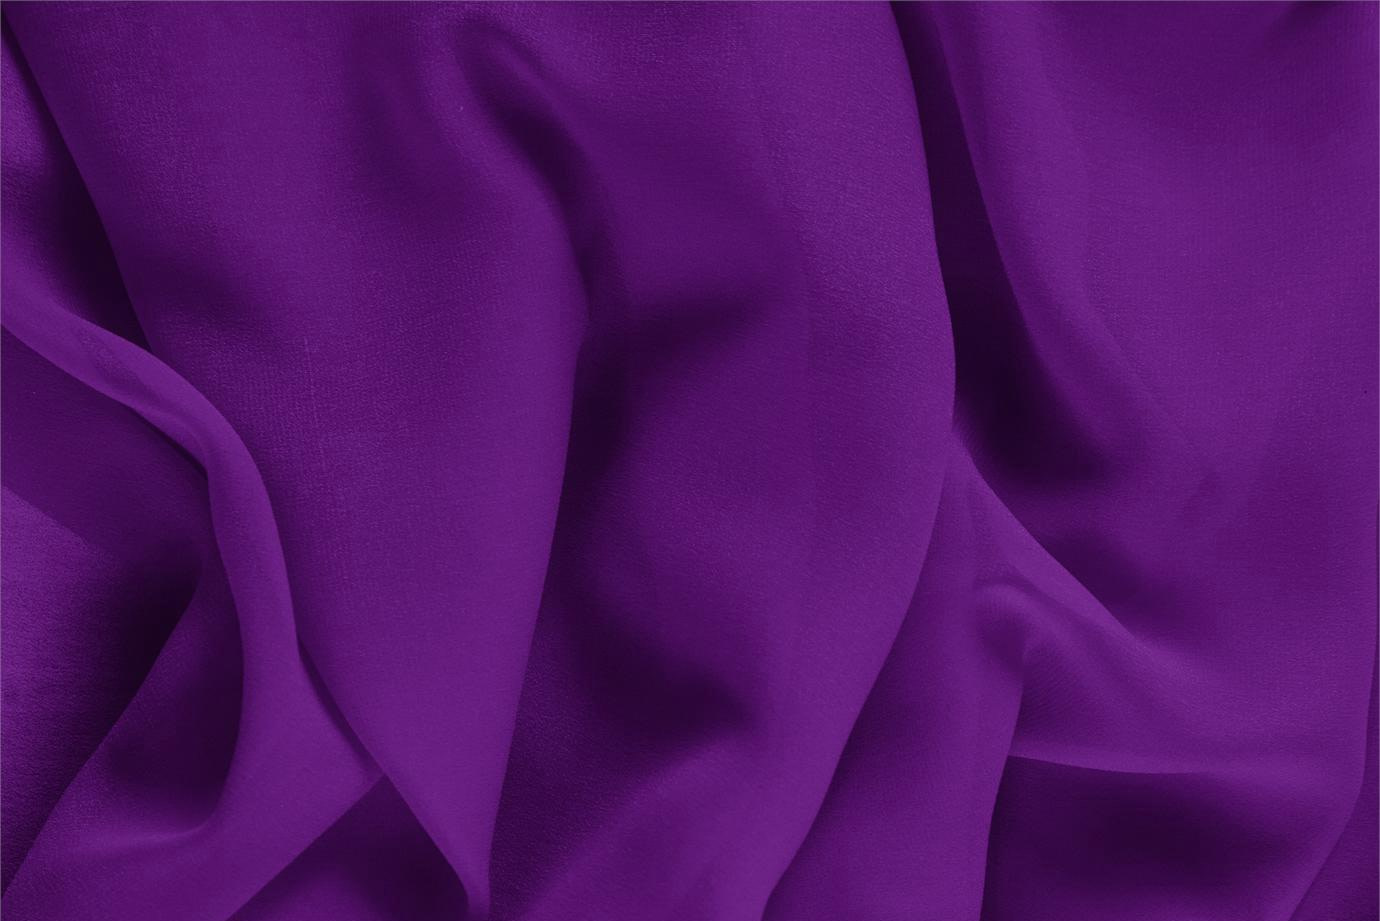 Blueberry Purple Silk Georgette fabric for dressmaking